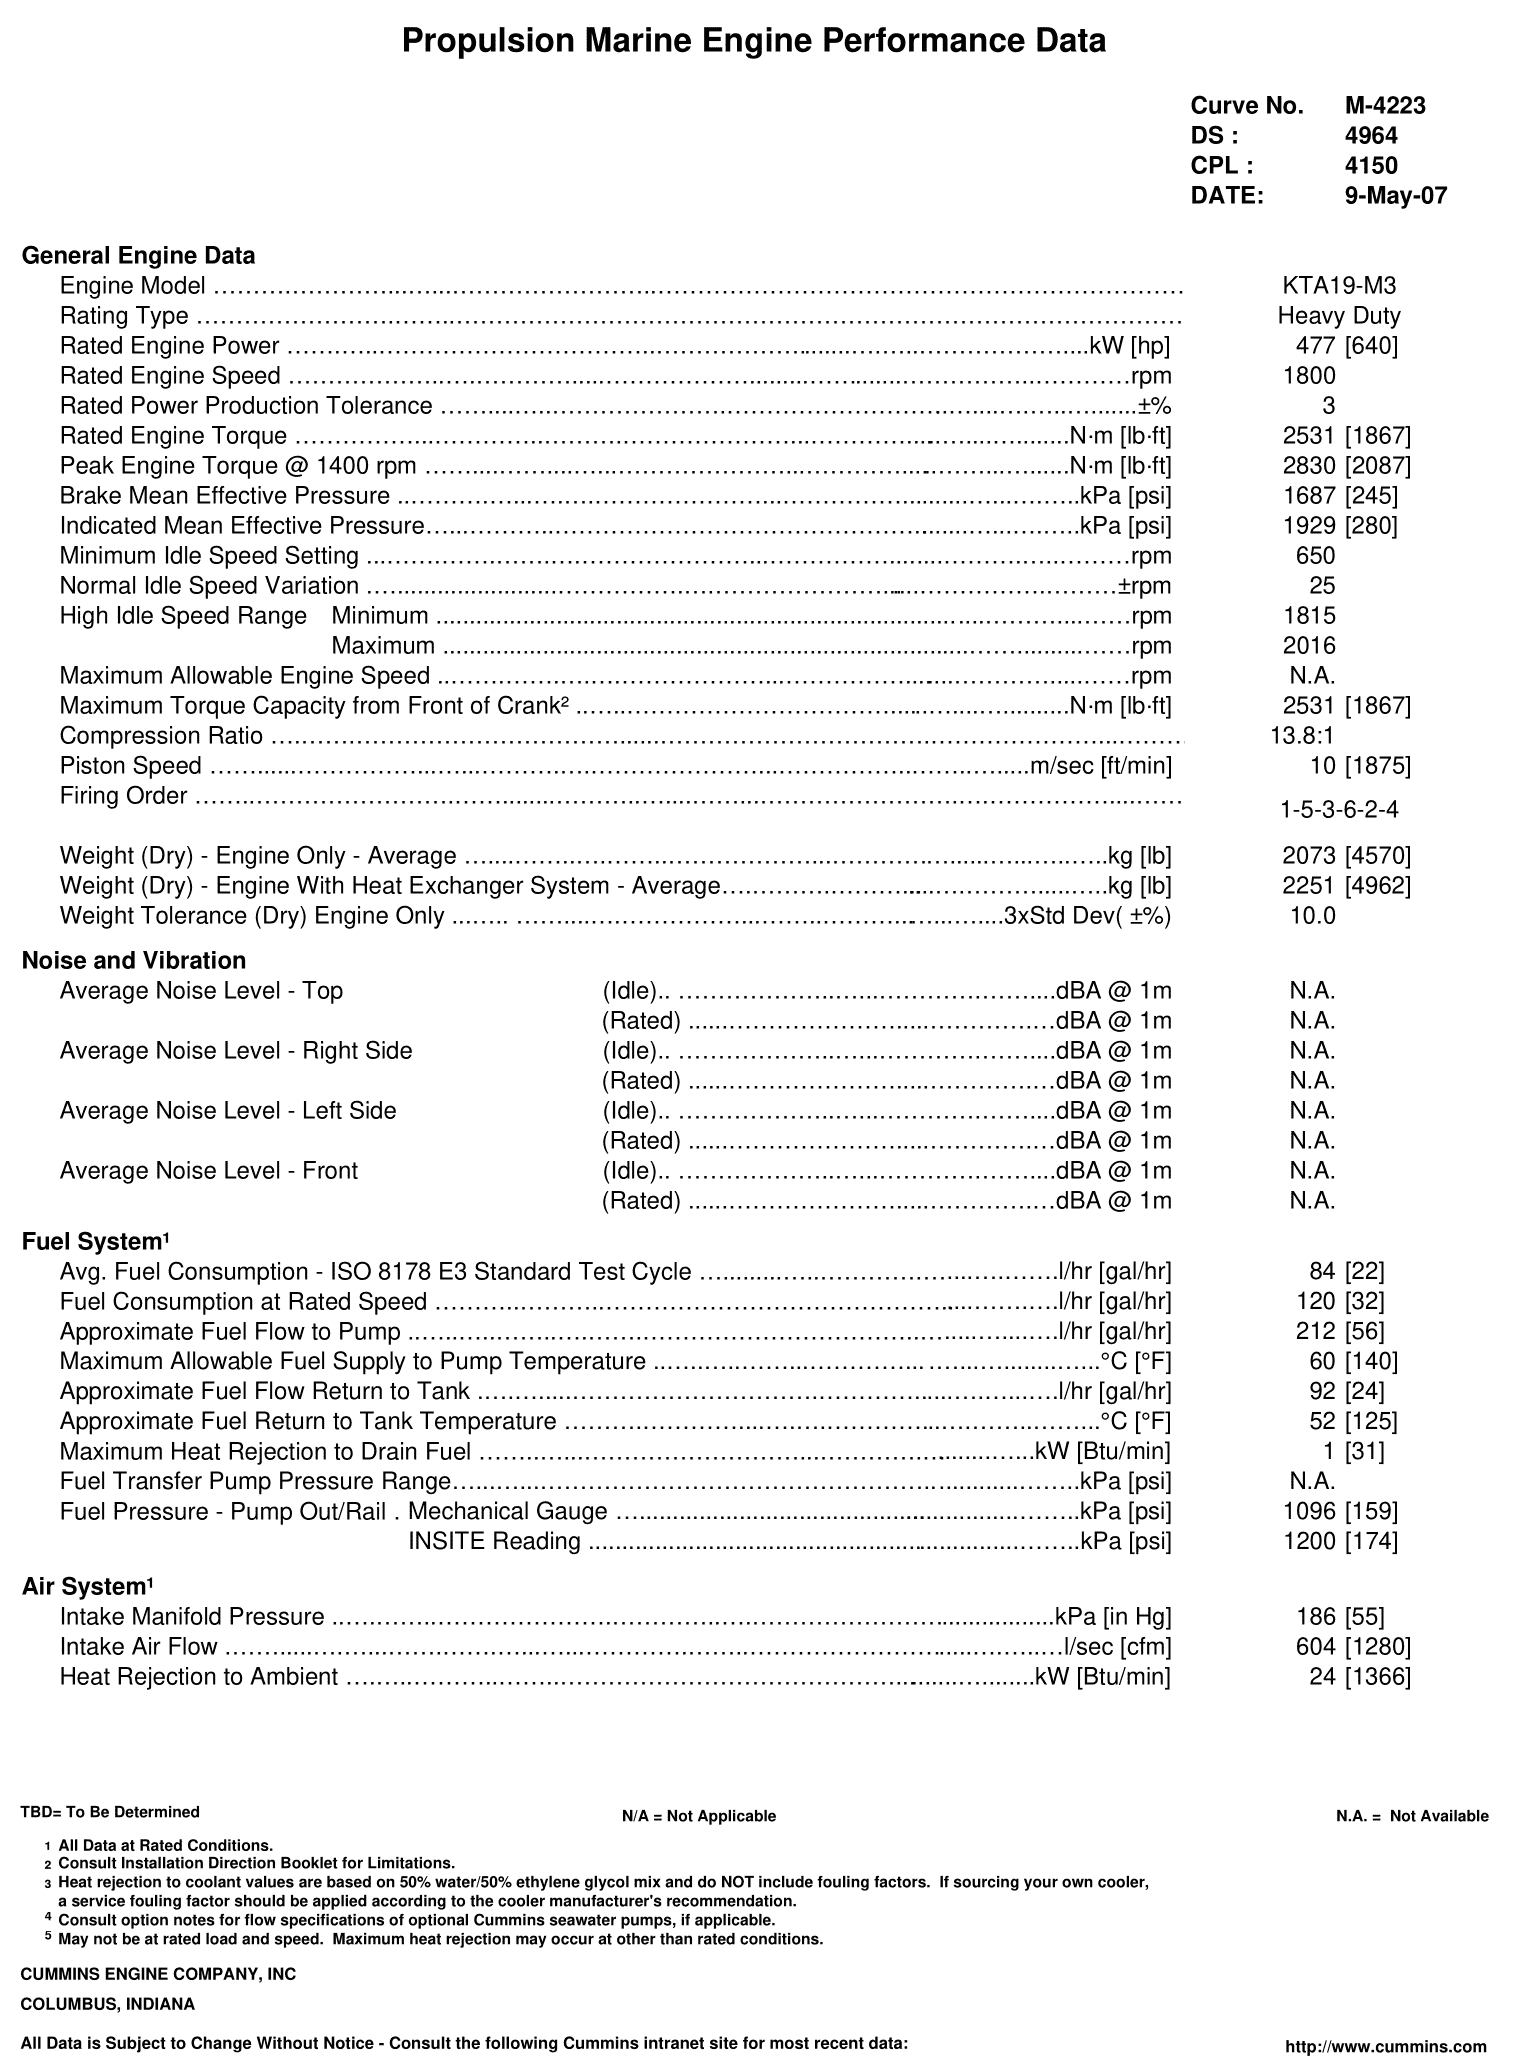 Cummins KTA19-M3 640 HP datasheet